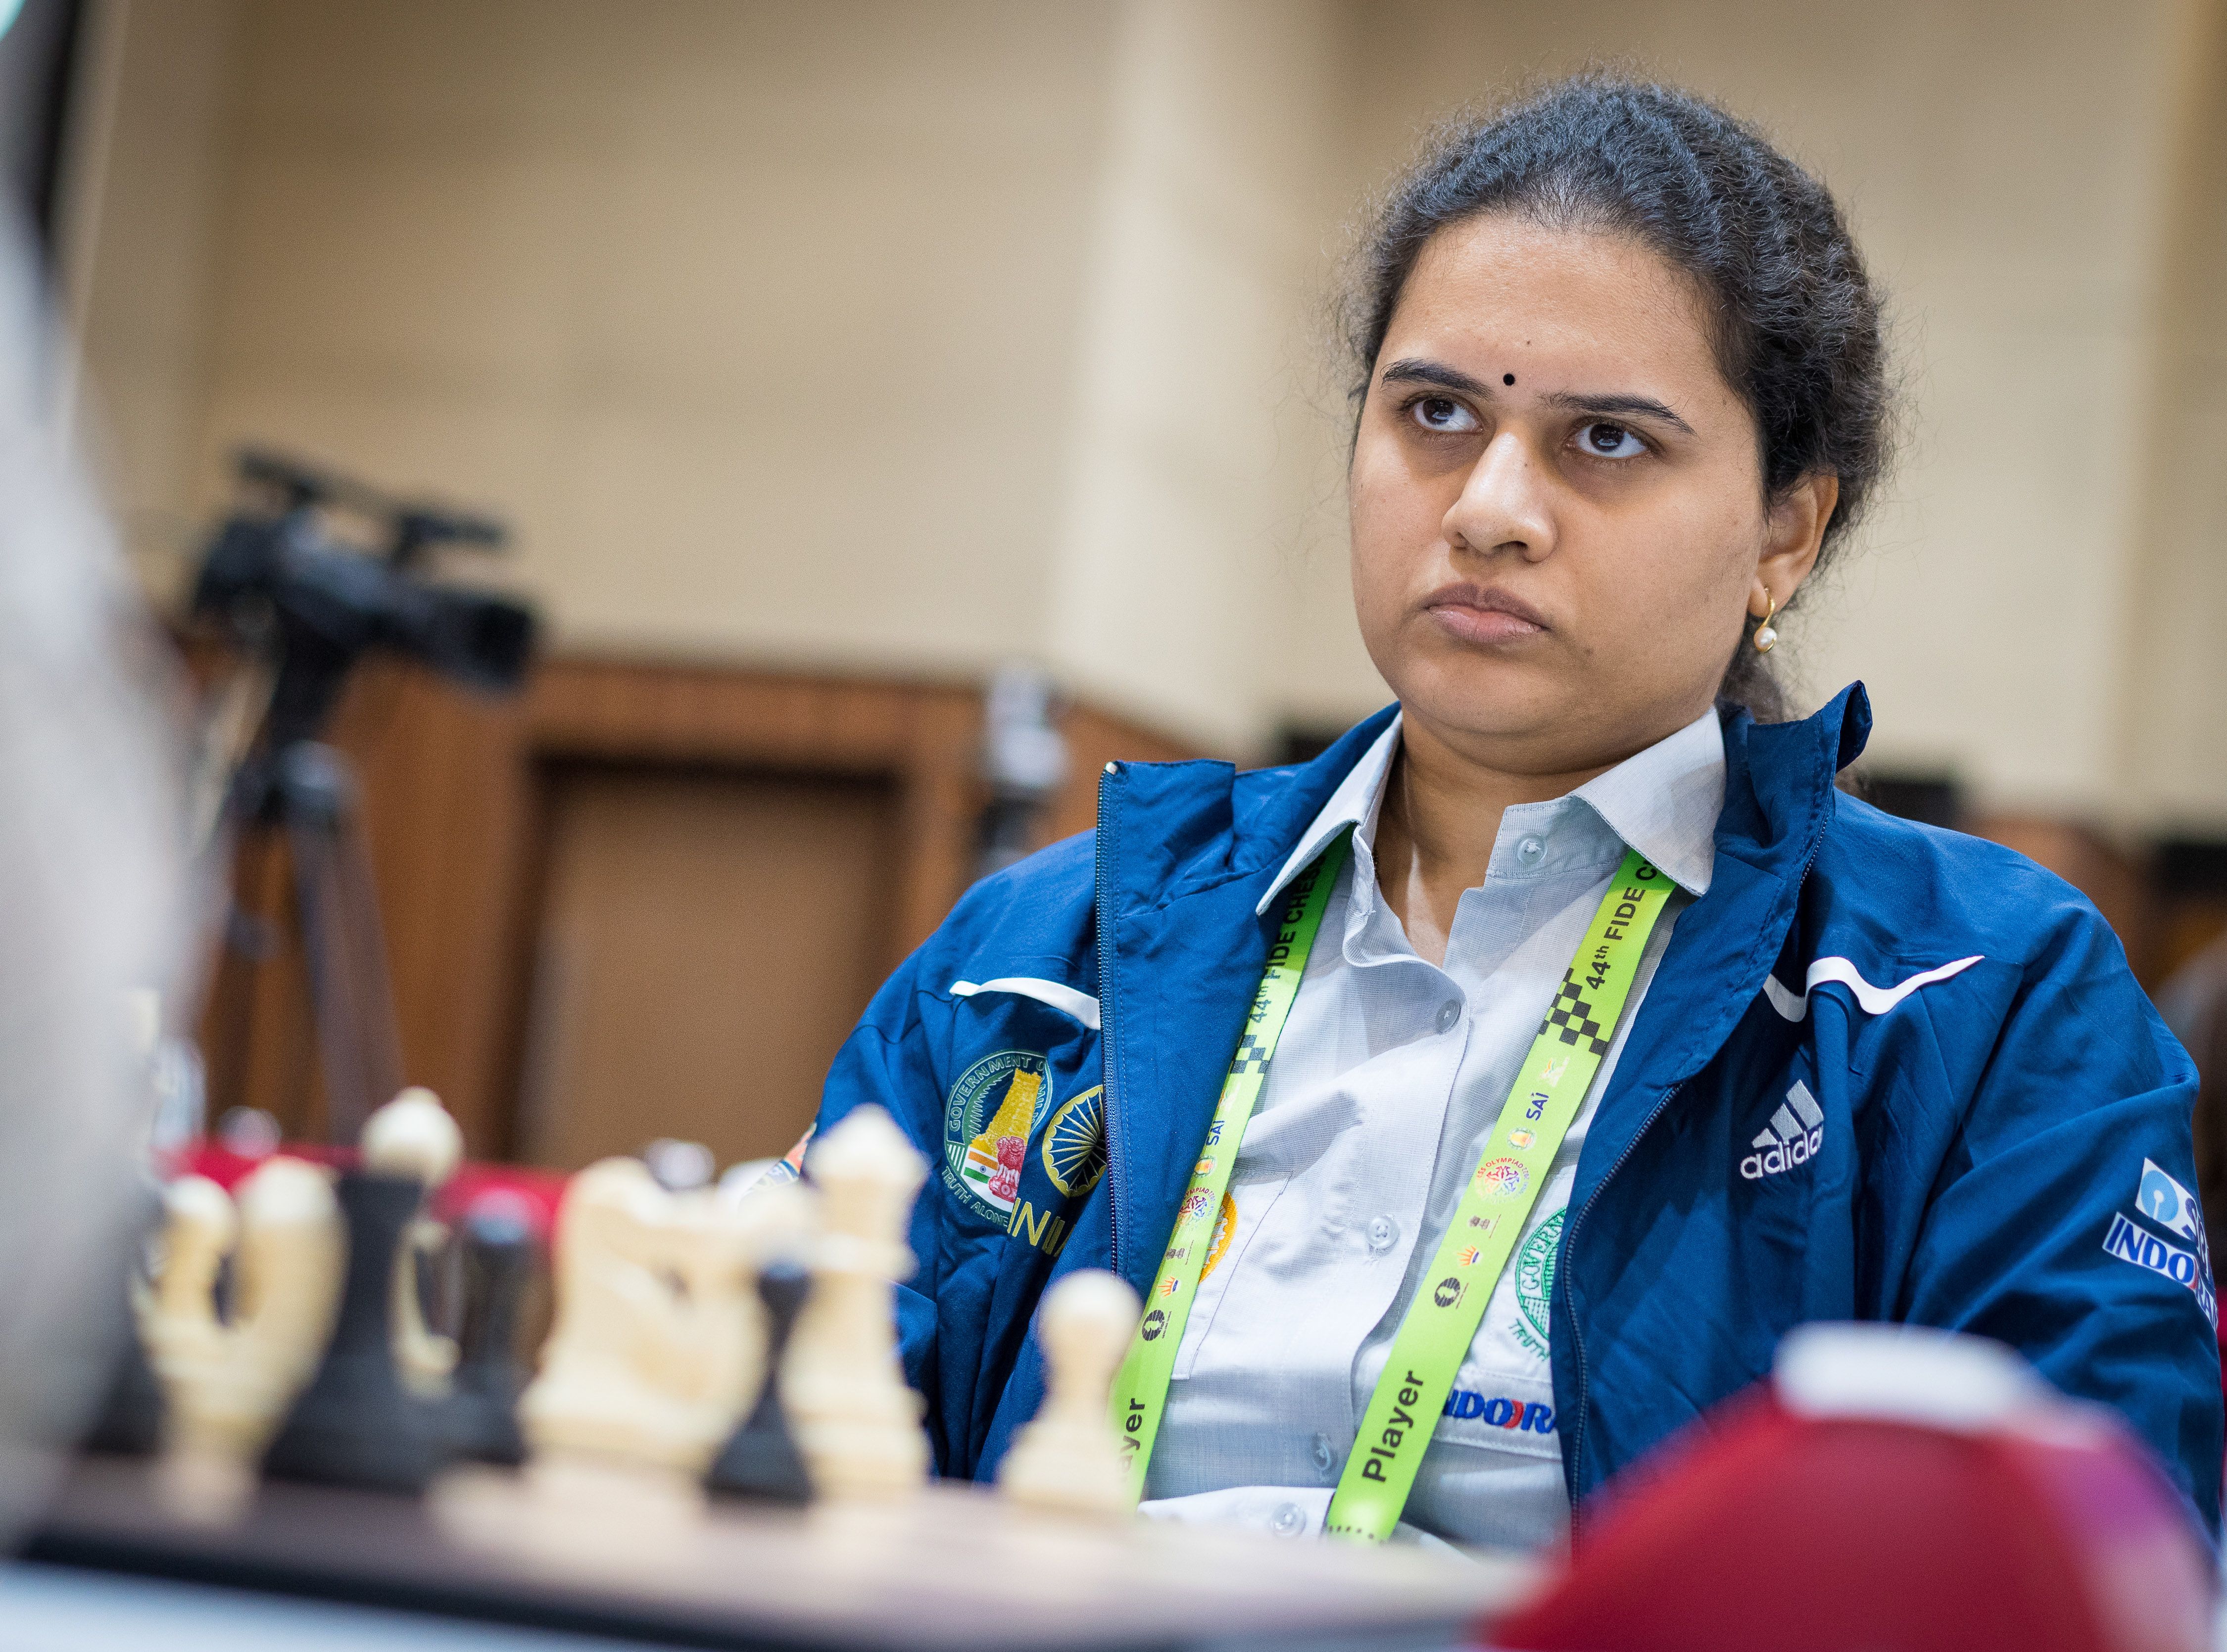 Meca do Xadrez', Chennai sediará a Olimpíada de Xadrez da FIDE 2022 